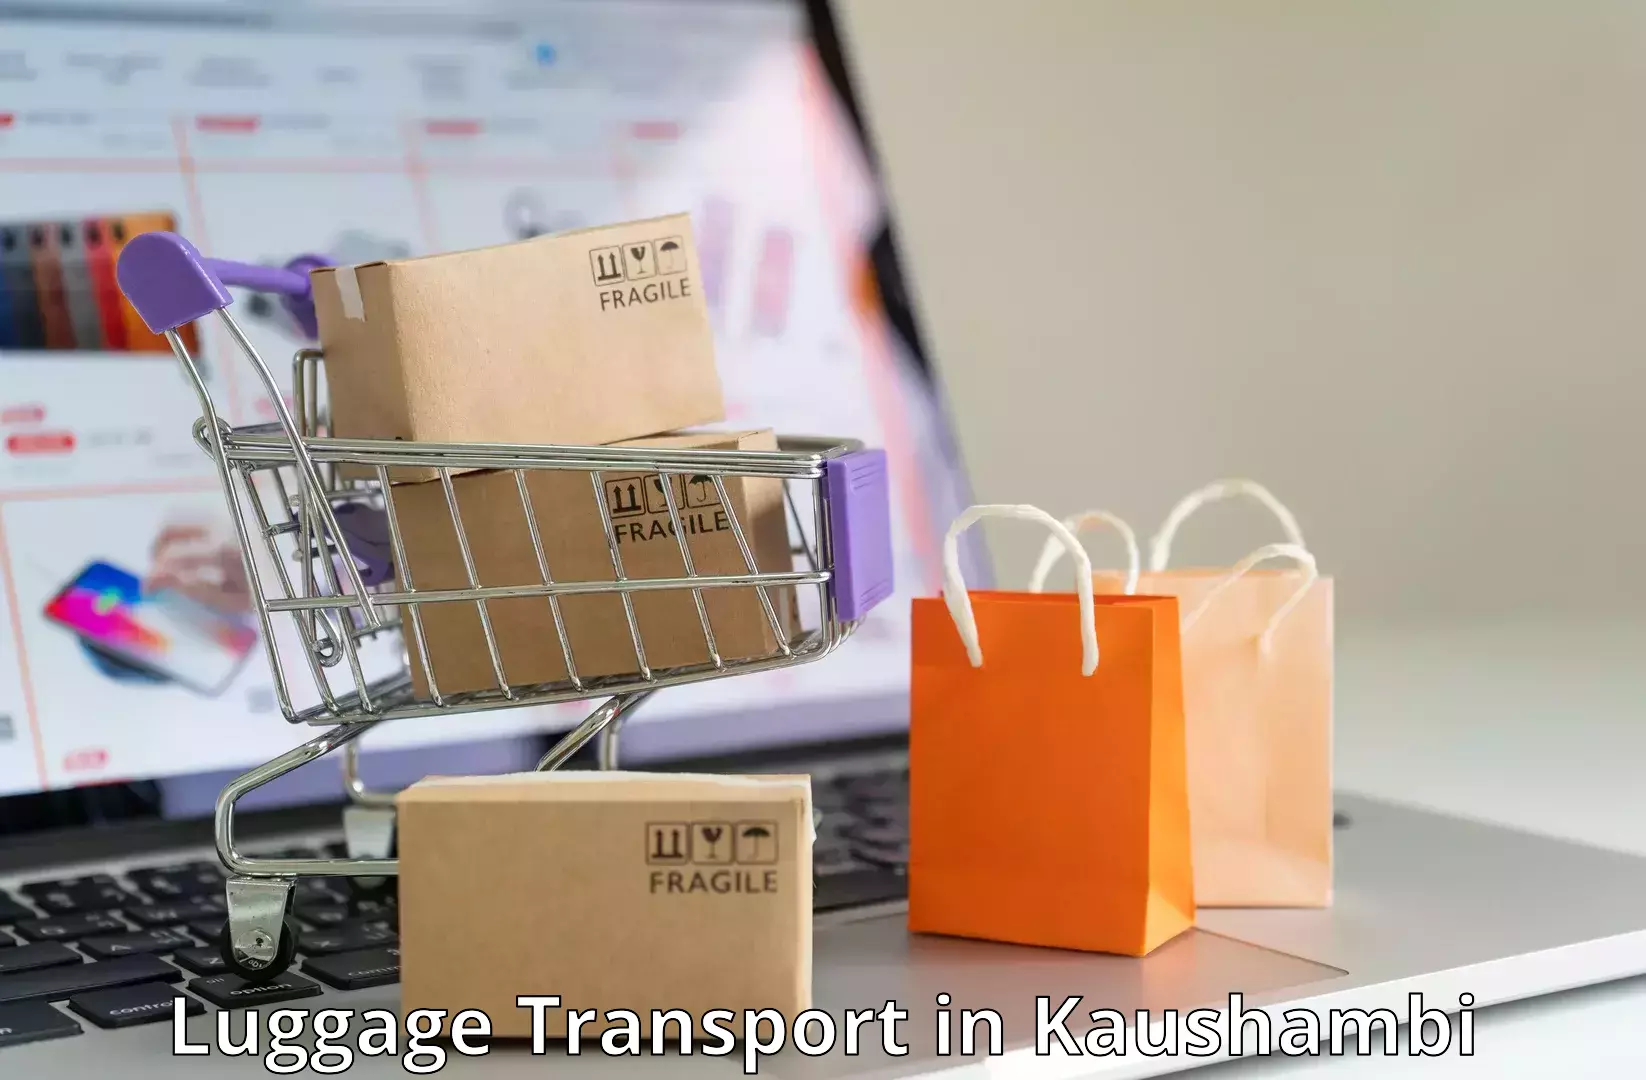 Baggage transport management in Kaushambi